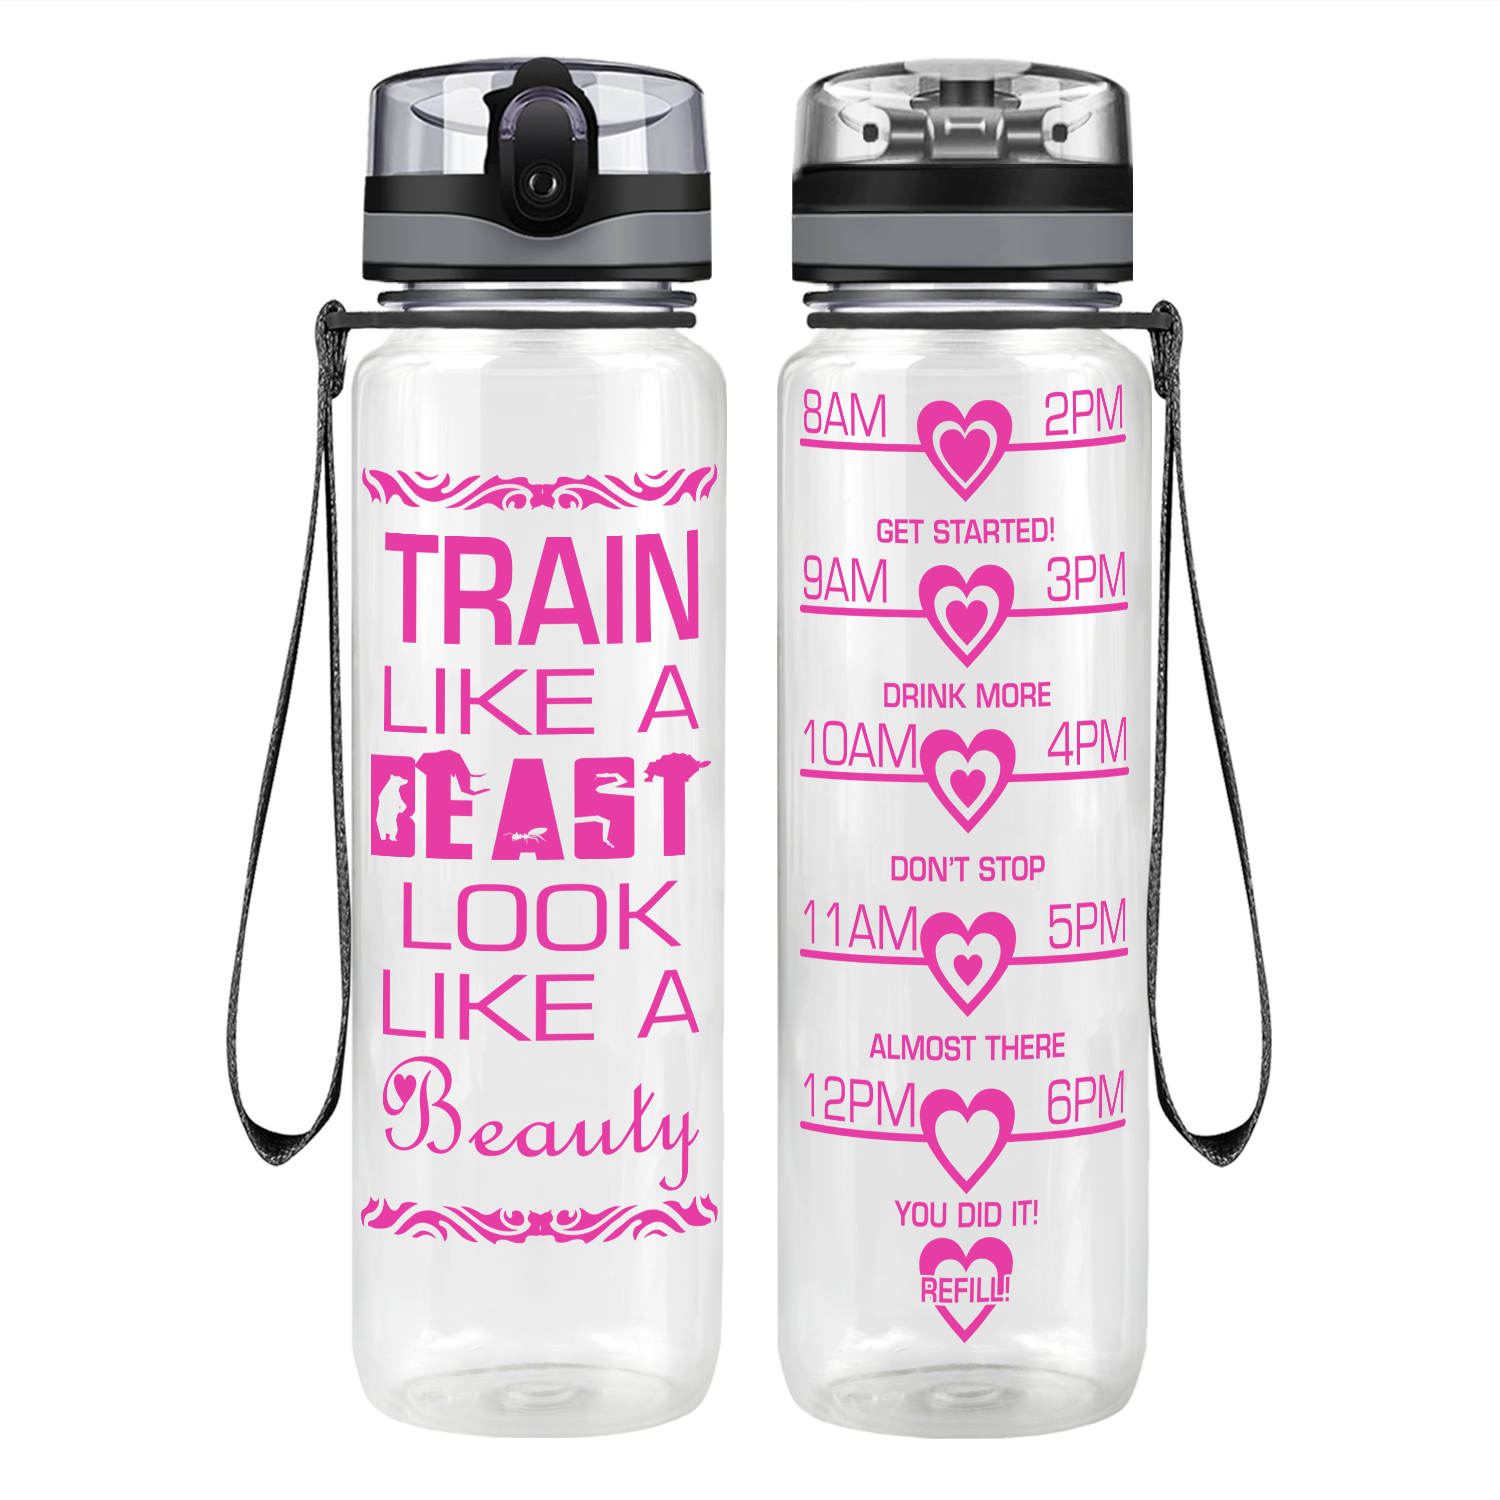 Train Like A Beast Motivational Tracking Water Bottle